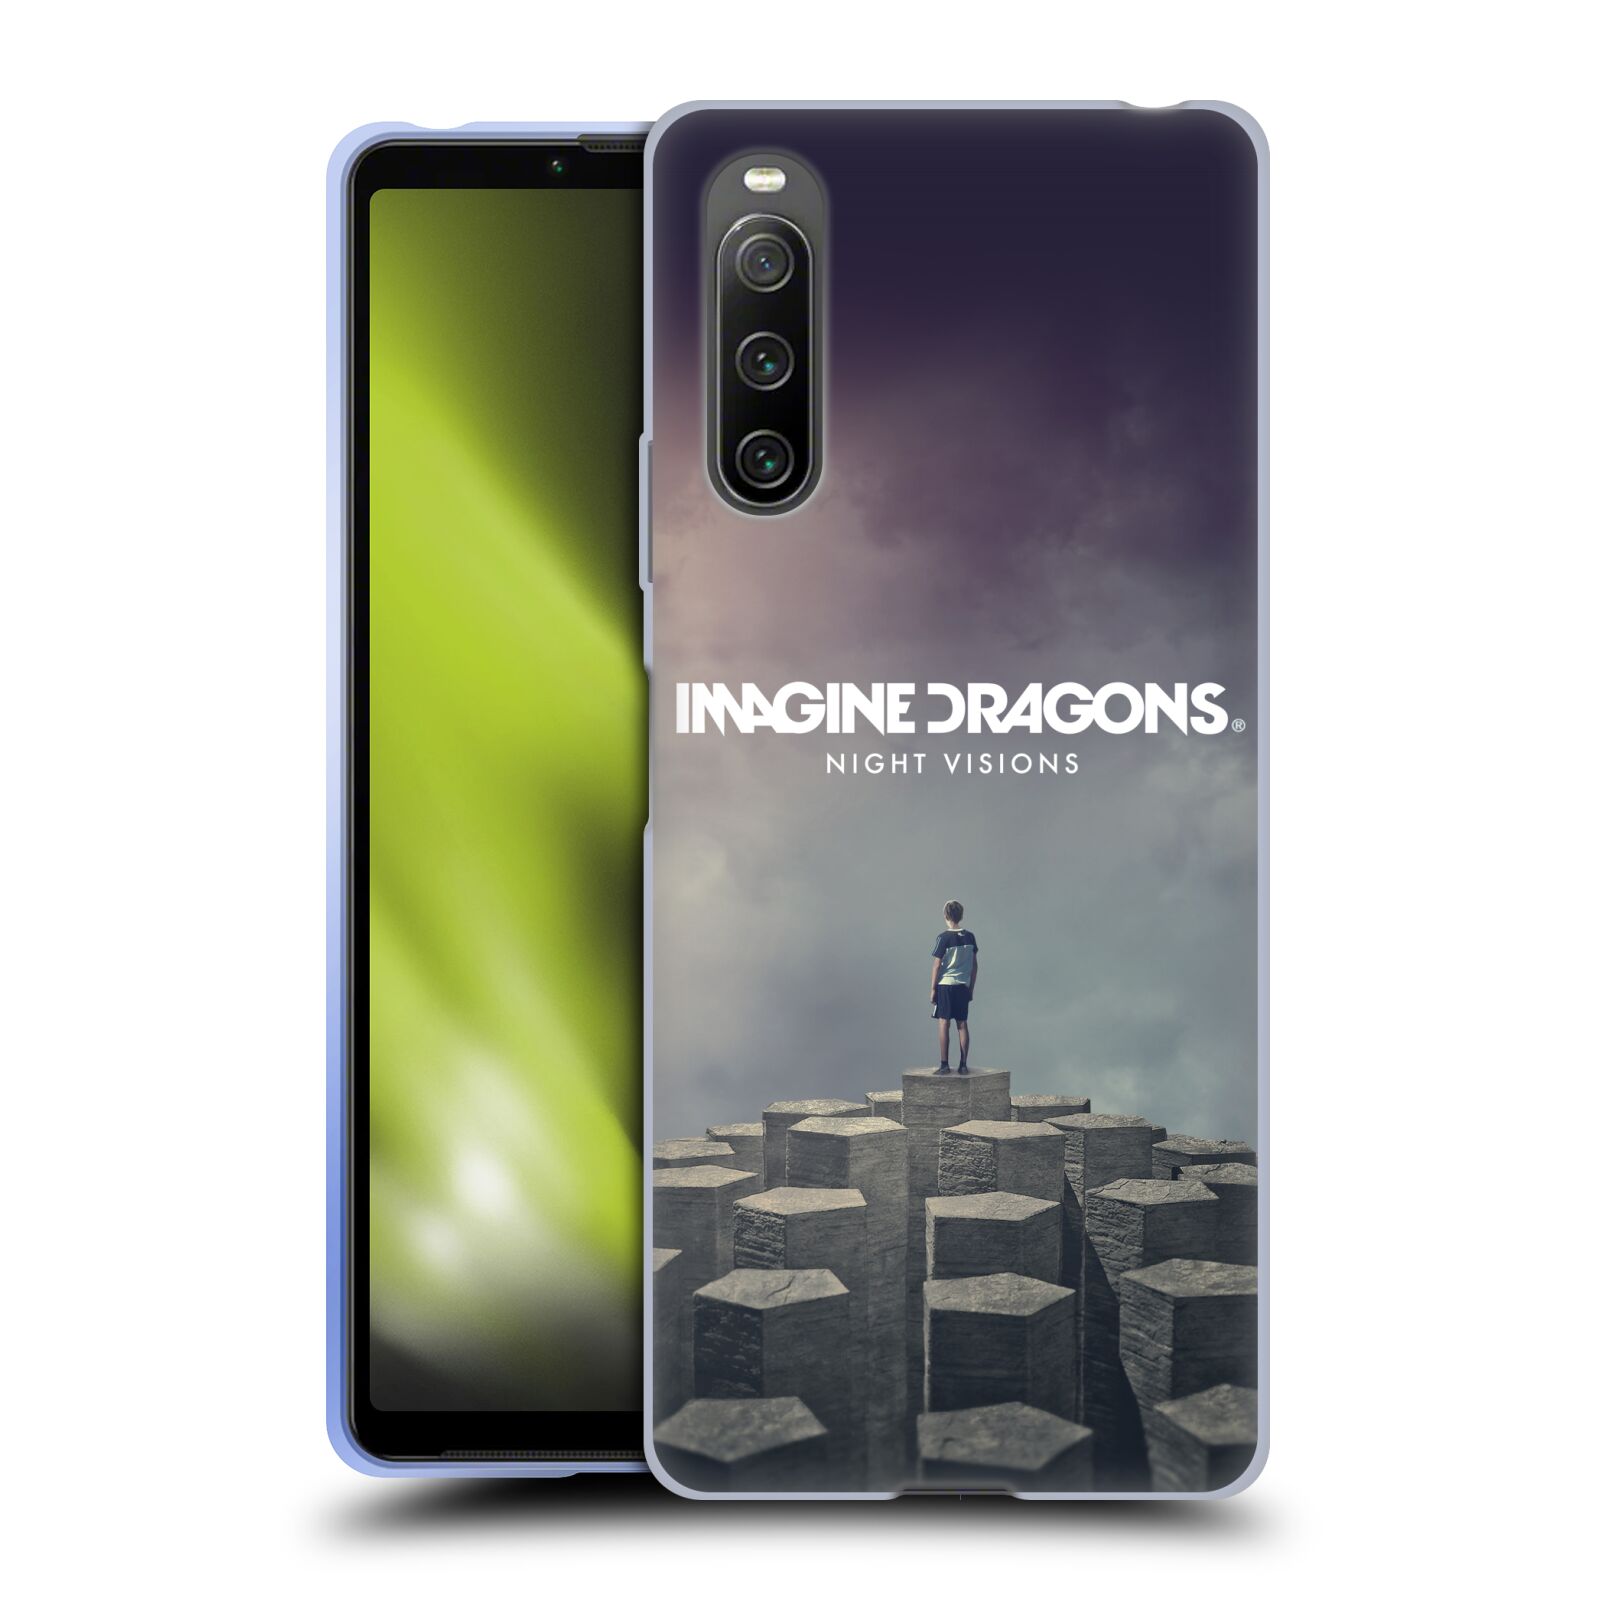 Silikonové pouzdro na mobil Sony Xperia 10 IV - Imagine Dragons - Night Visions